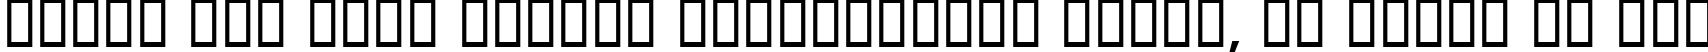 Пример написания шрифтом Aharoni Bold текста на русском